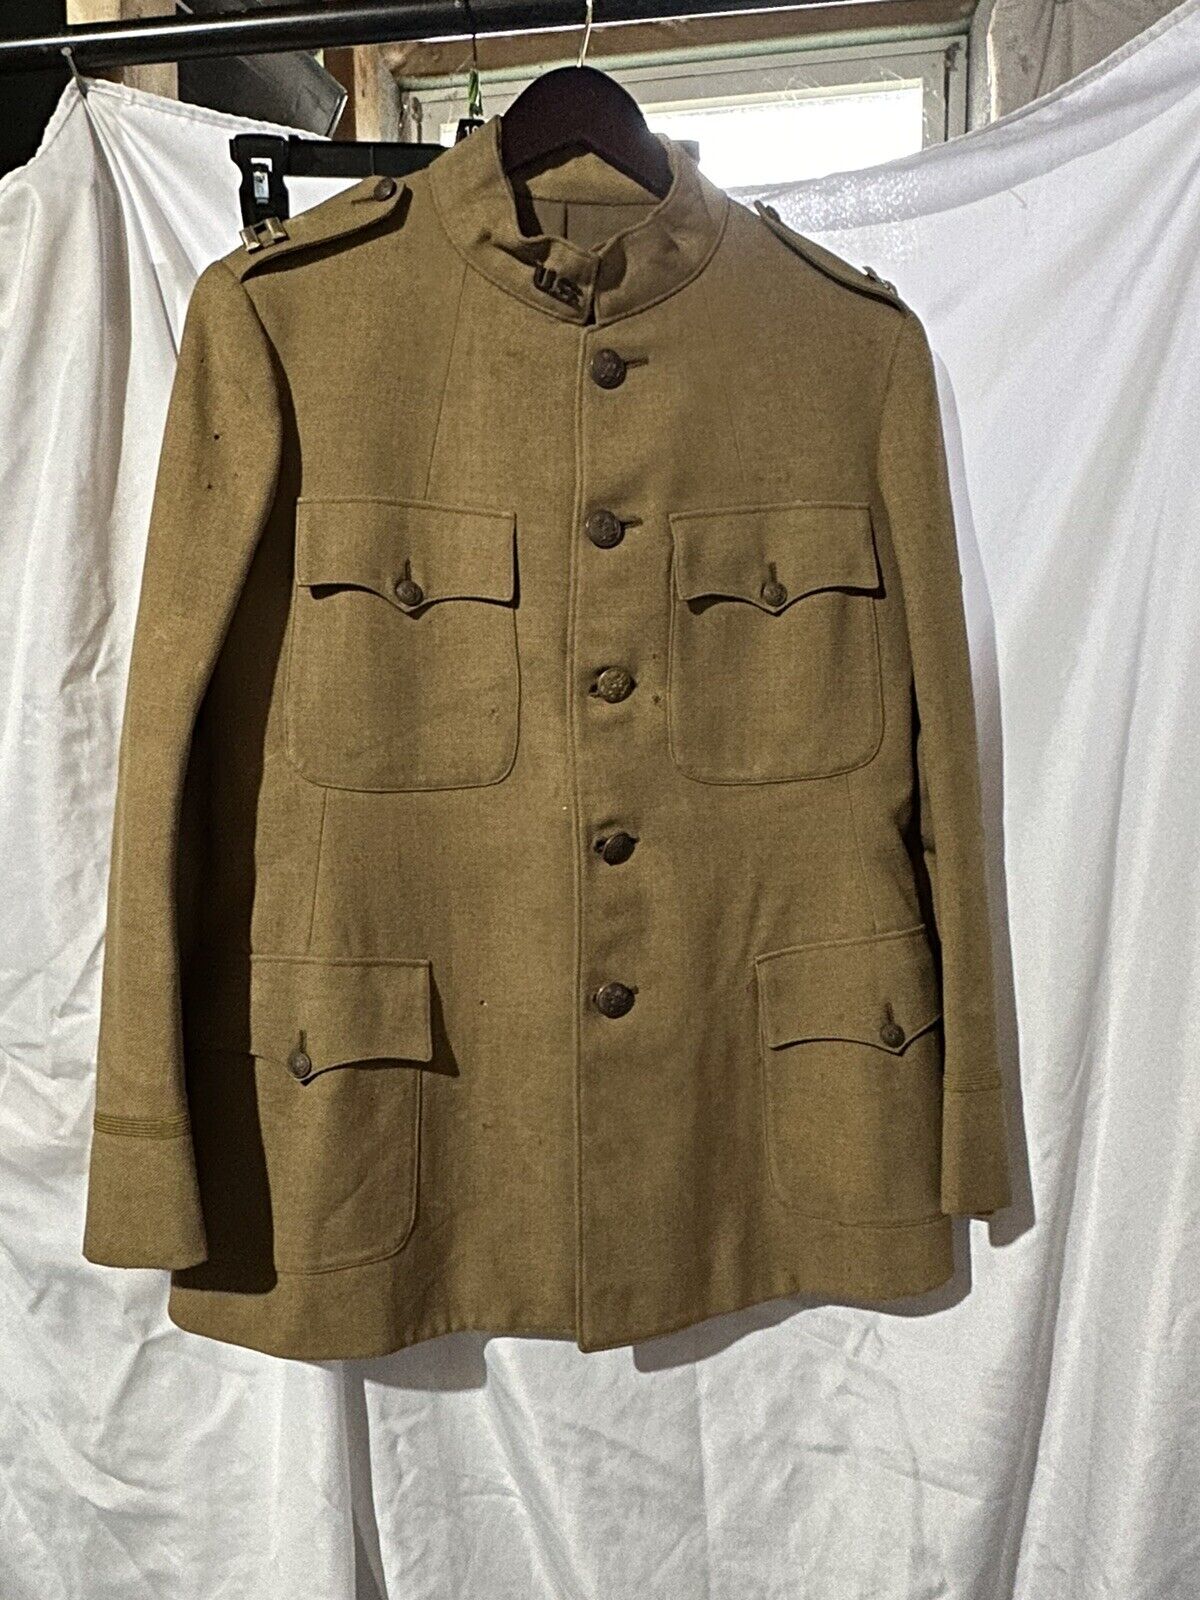 ORIGINAL WW1 US ARMY WOOL JACKET Officer's Captain Uniform Tunic Vintage